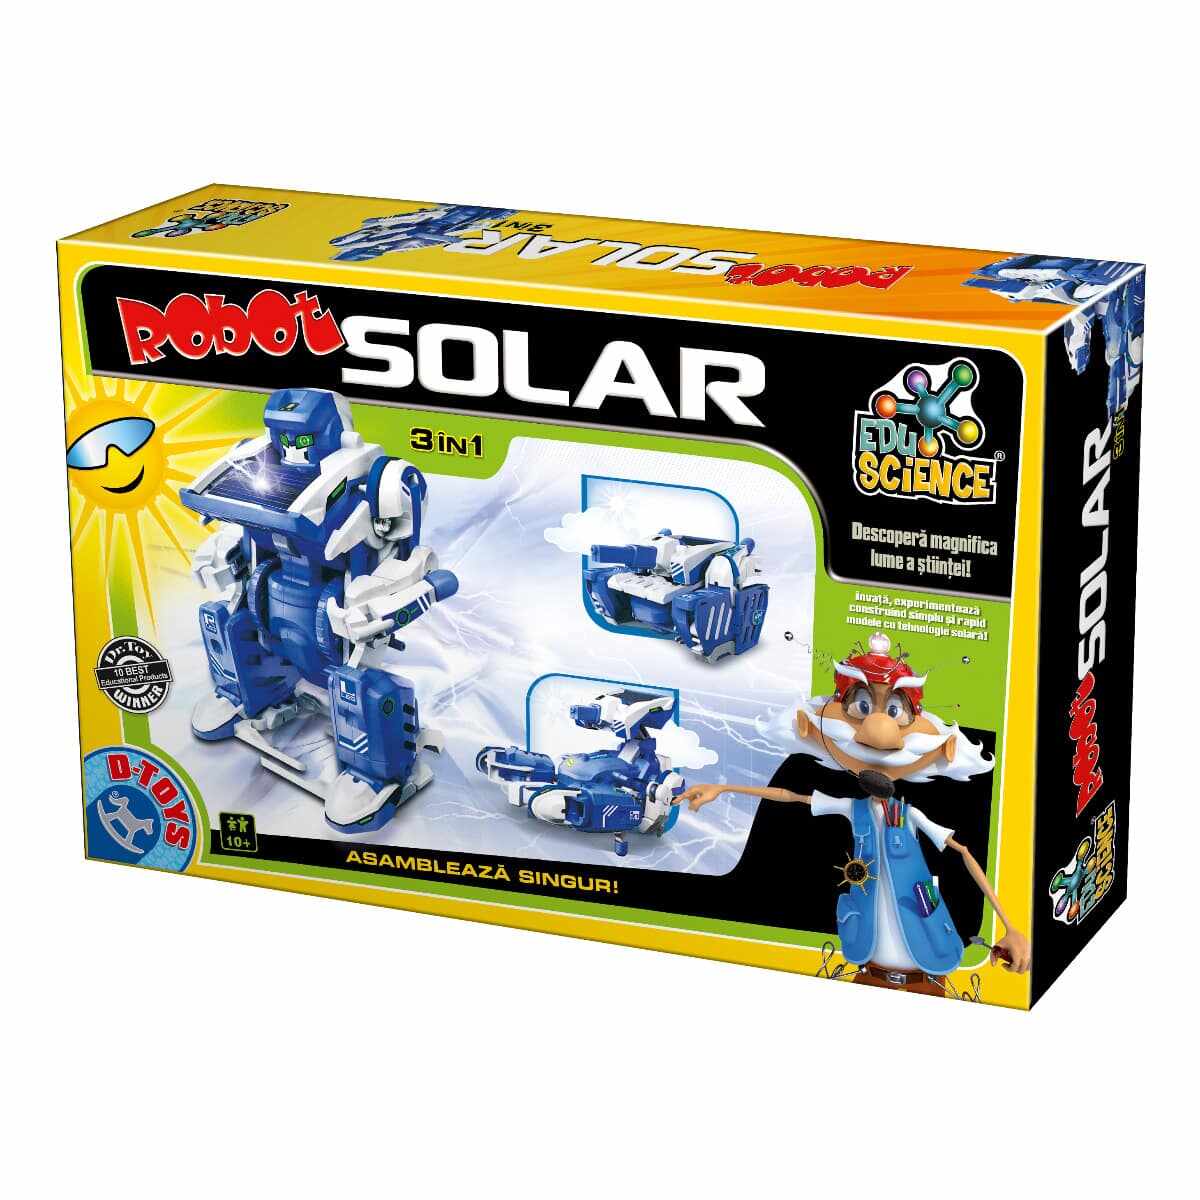 Robot solar 3-în-1 - Joc educativ - EduScience